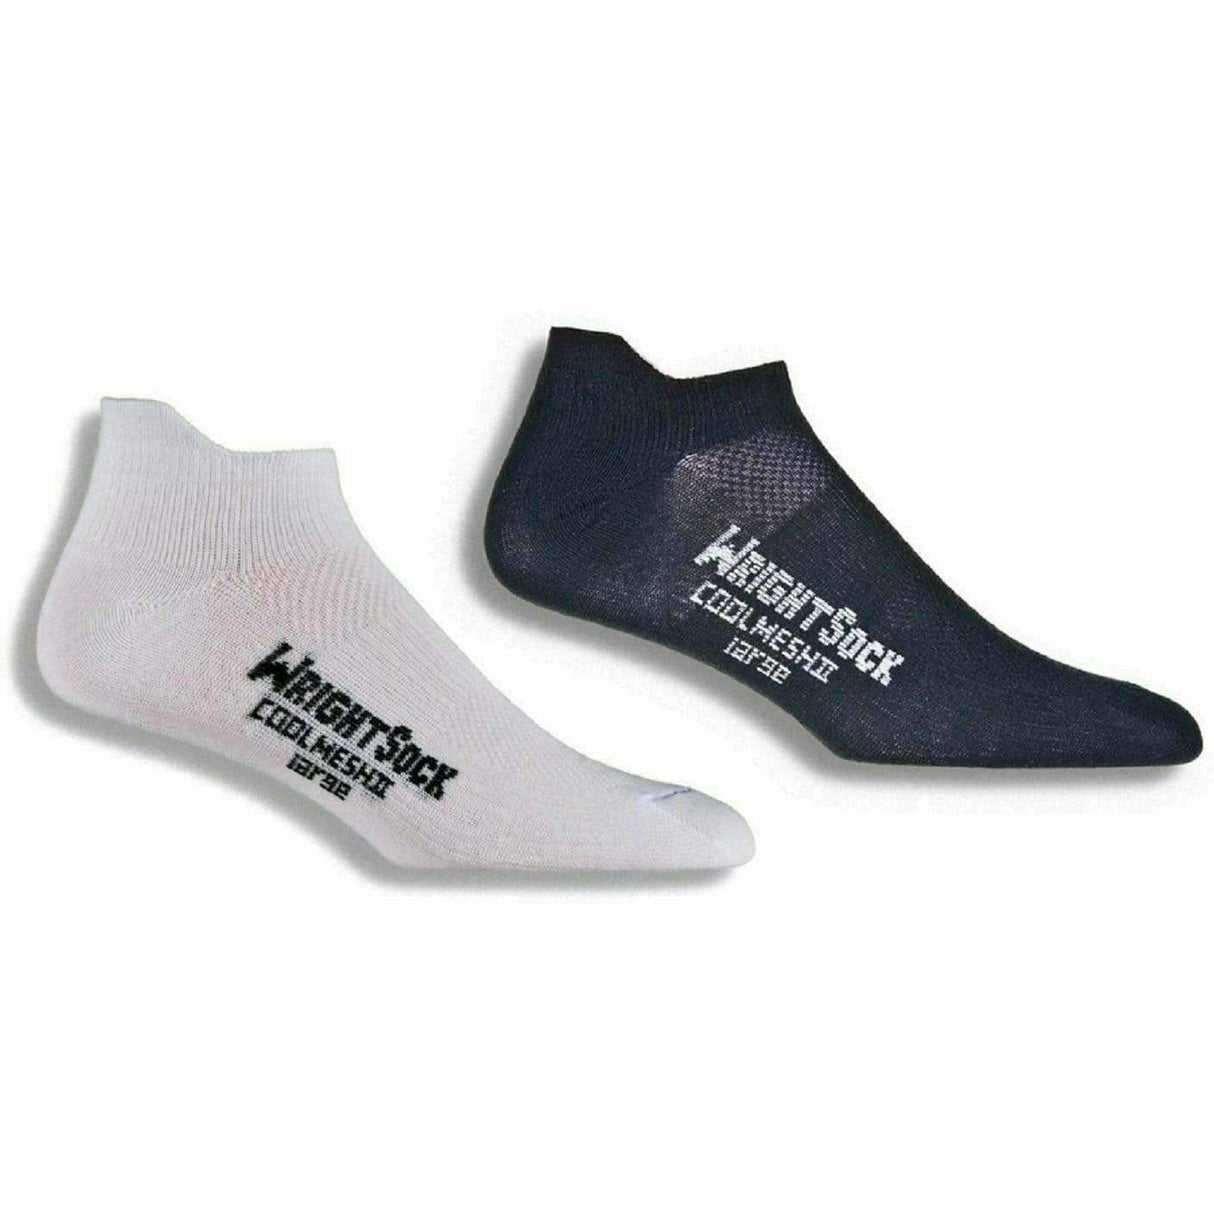 Wrightsock Coolmesh II Tab Socks  -  Small / Black/White / 2-Pair Pack